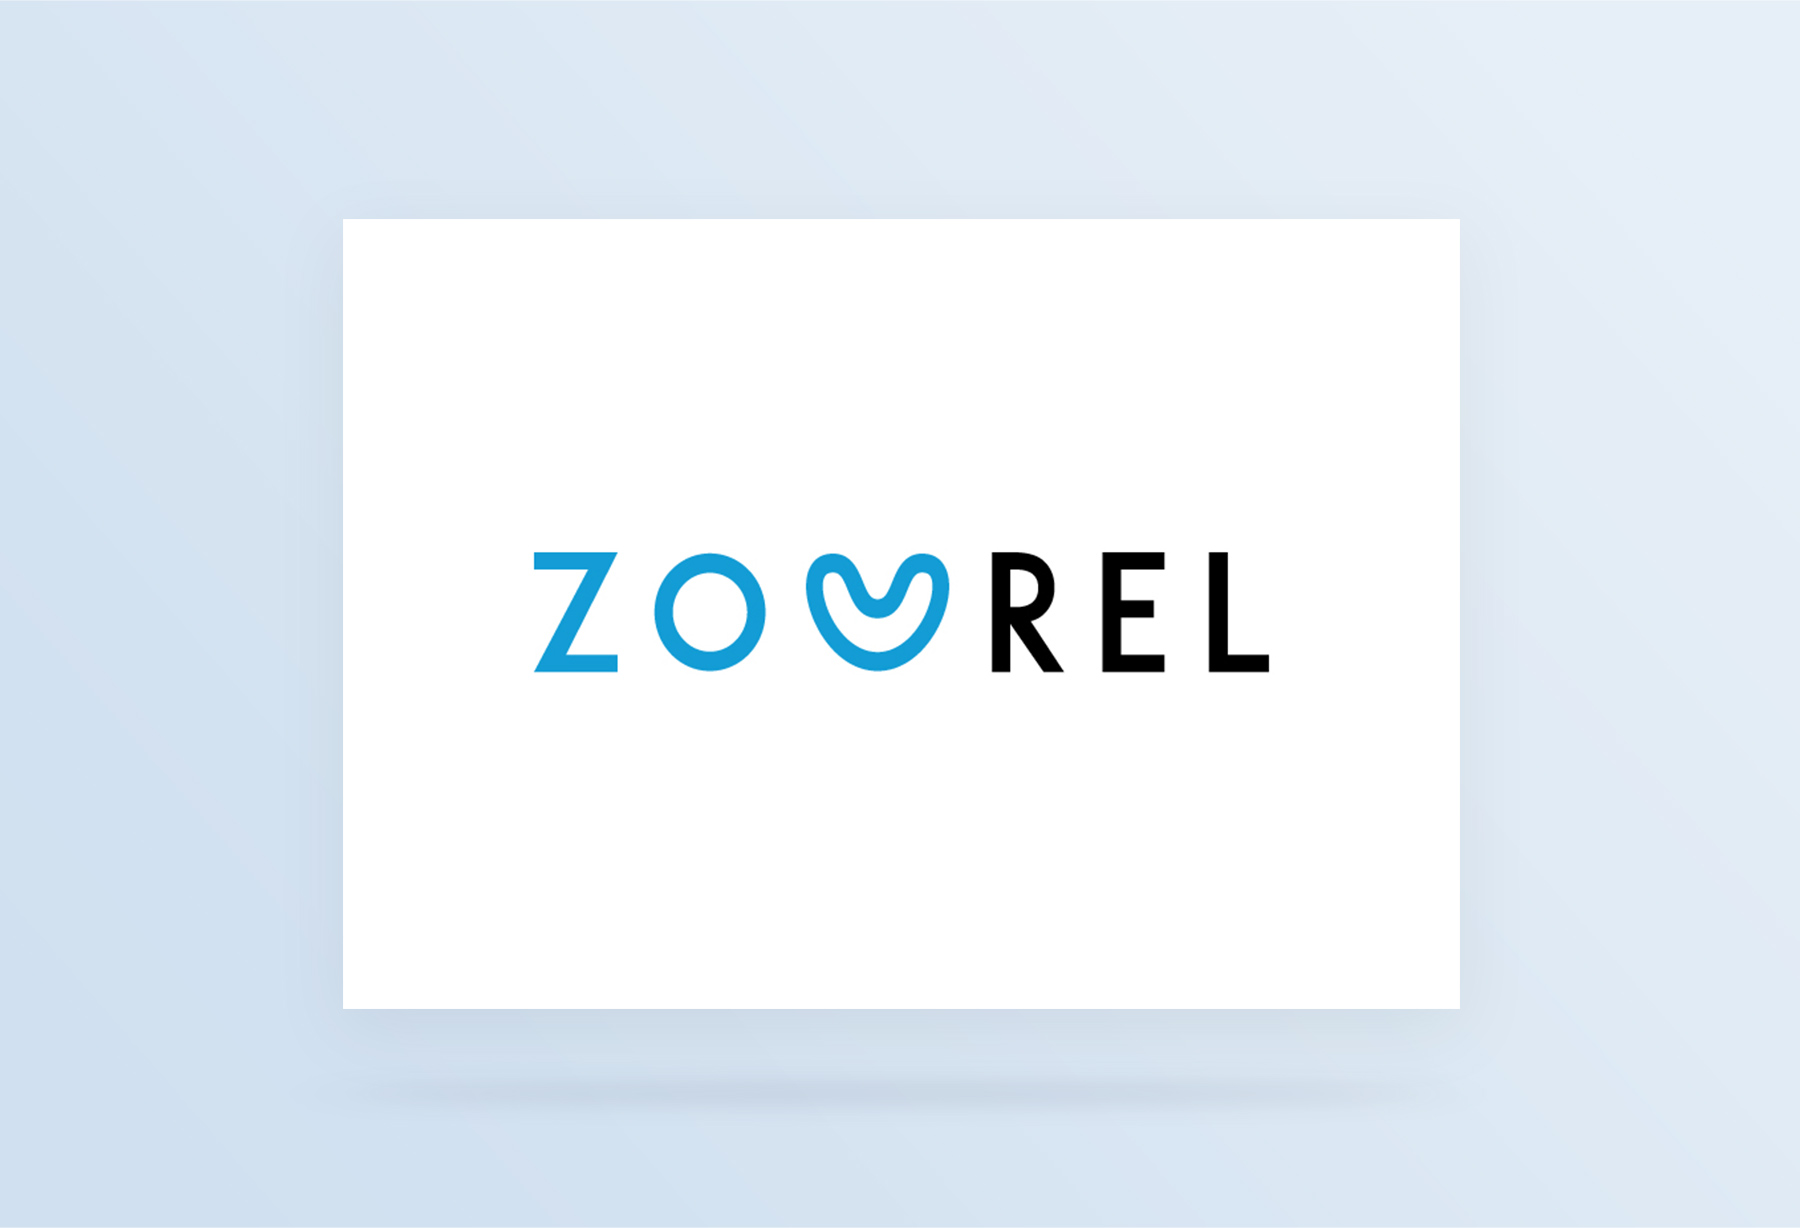 Zoorel ランニングホームラン株式会社 チームを強くするブランディング クリエイティブ